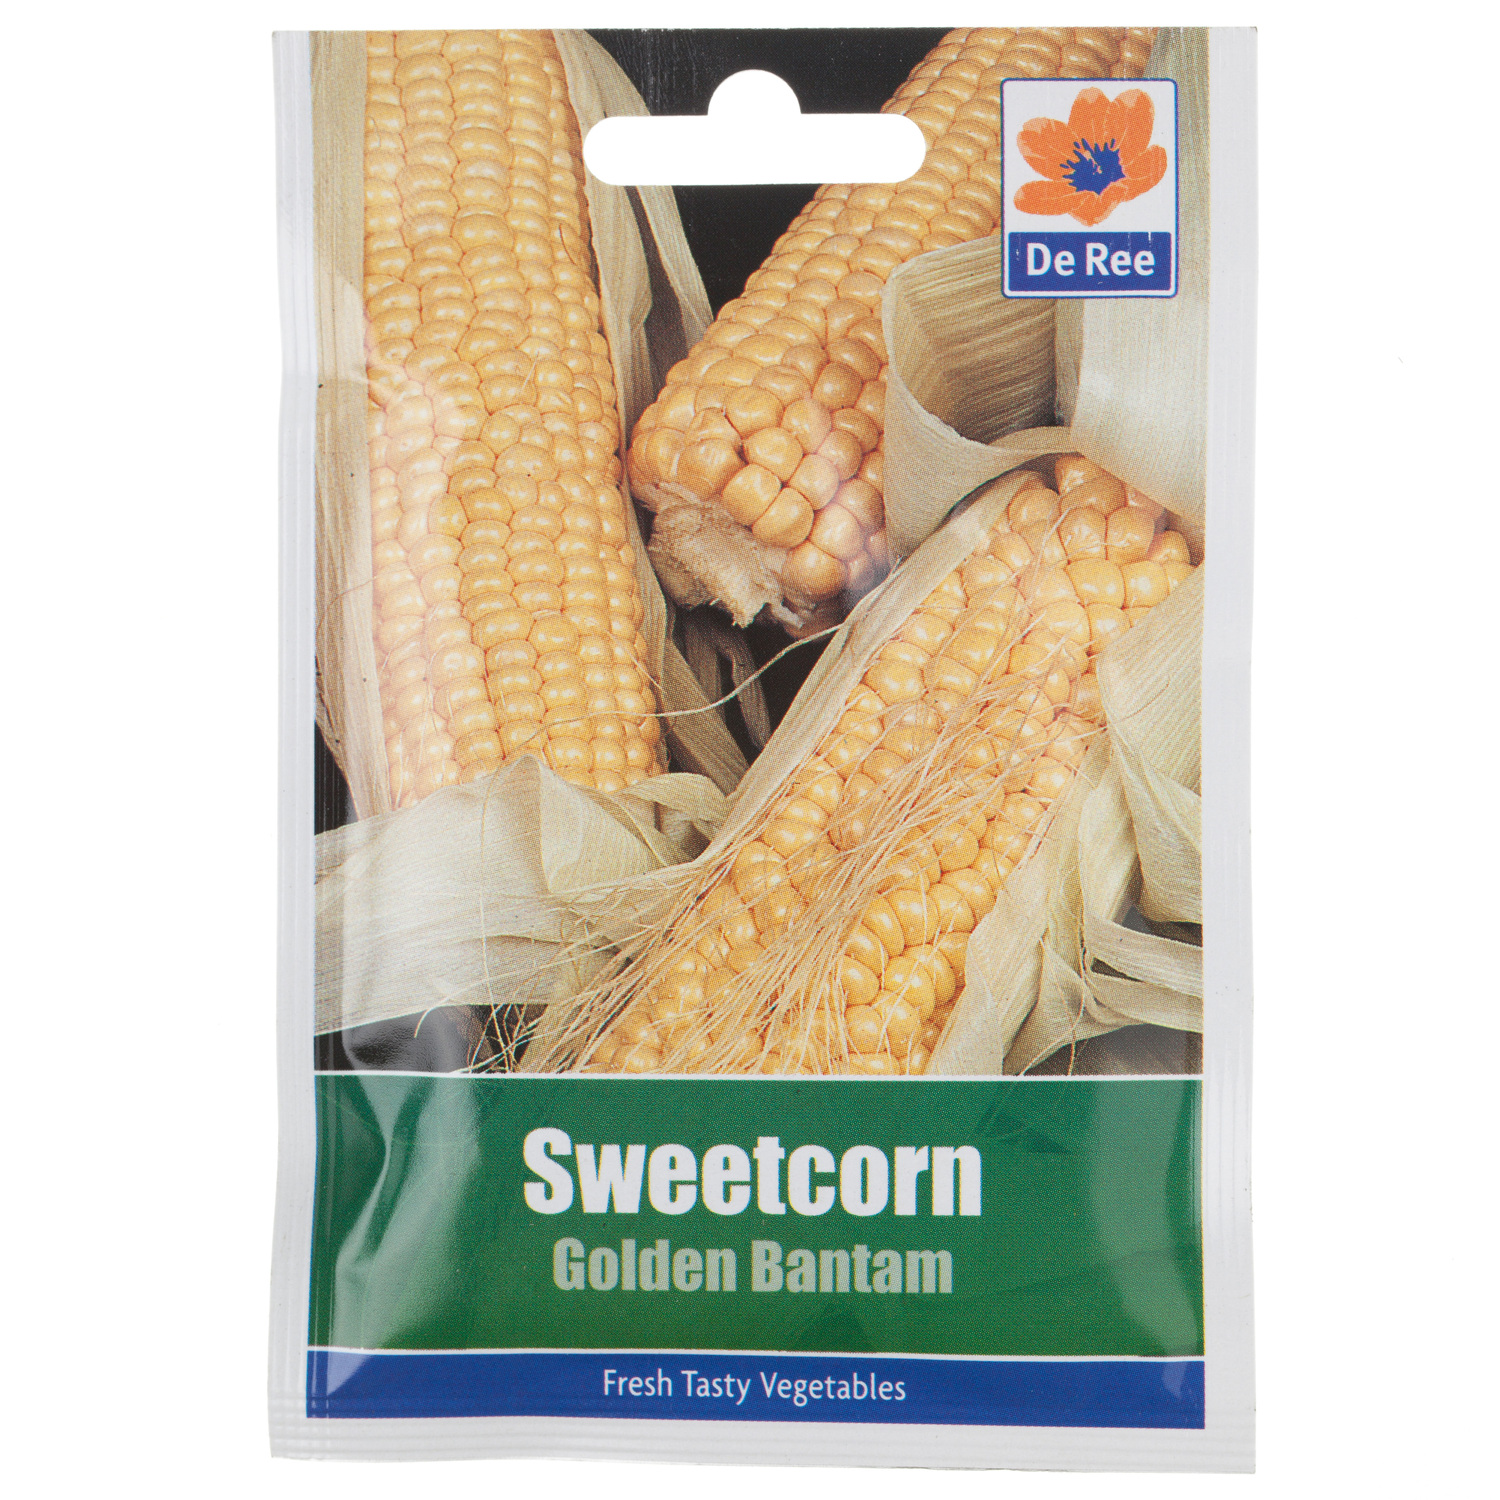 Golden Bantam Sweetcorn Seed Packet Image